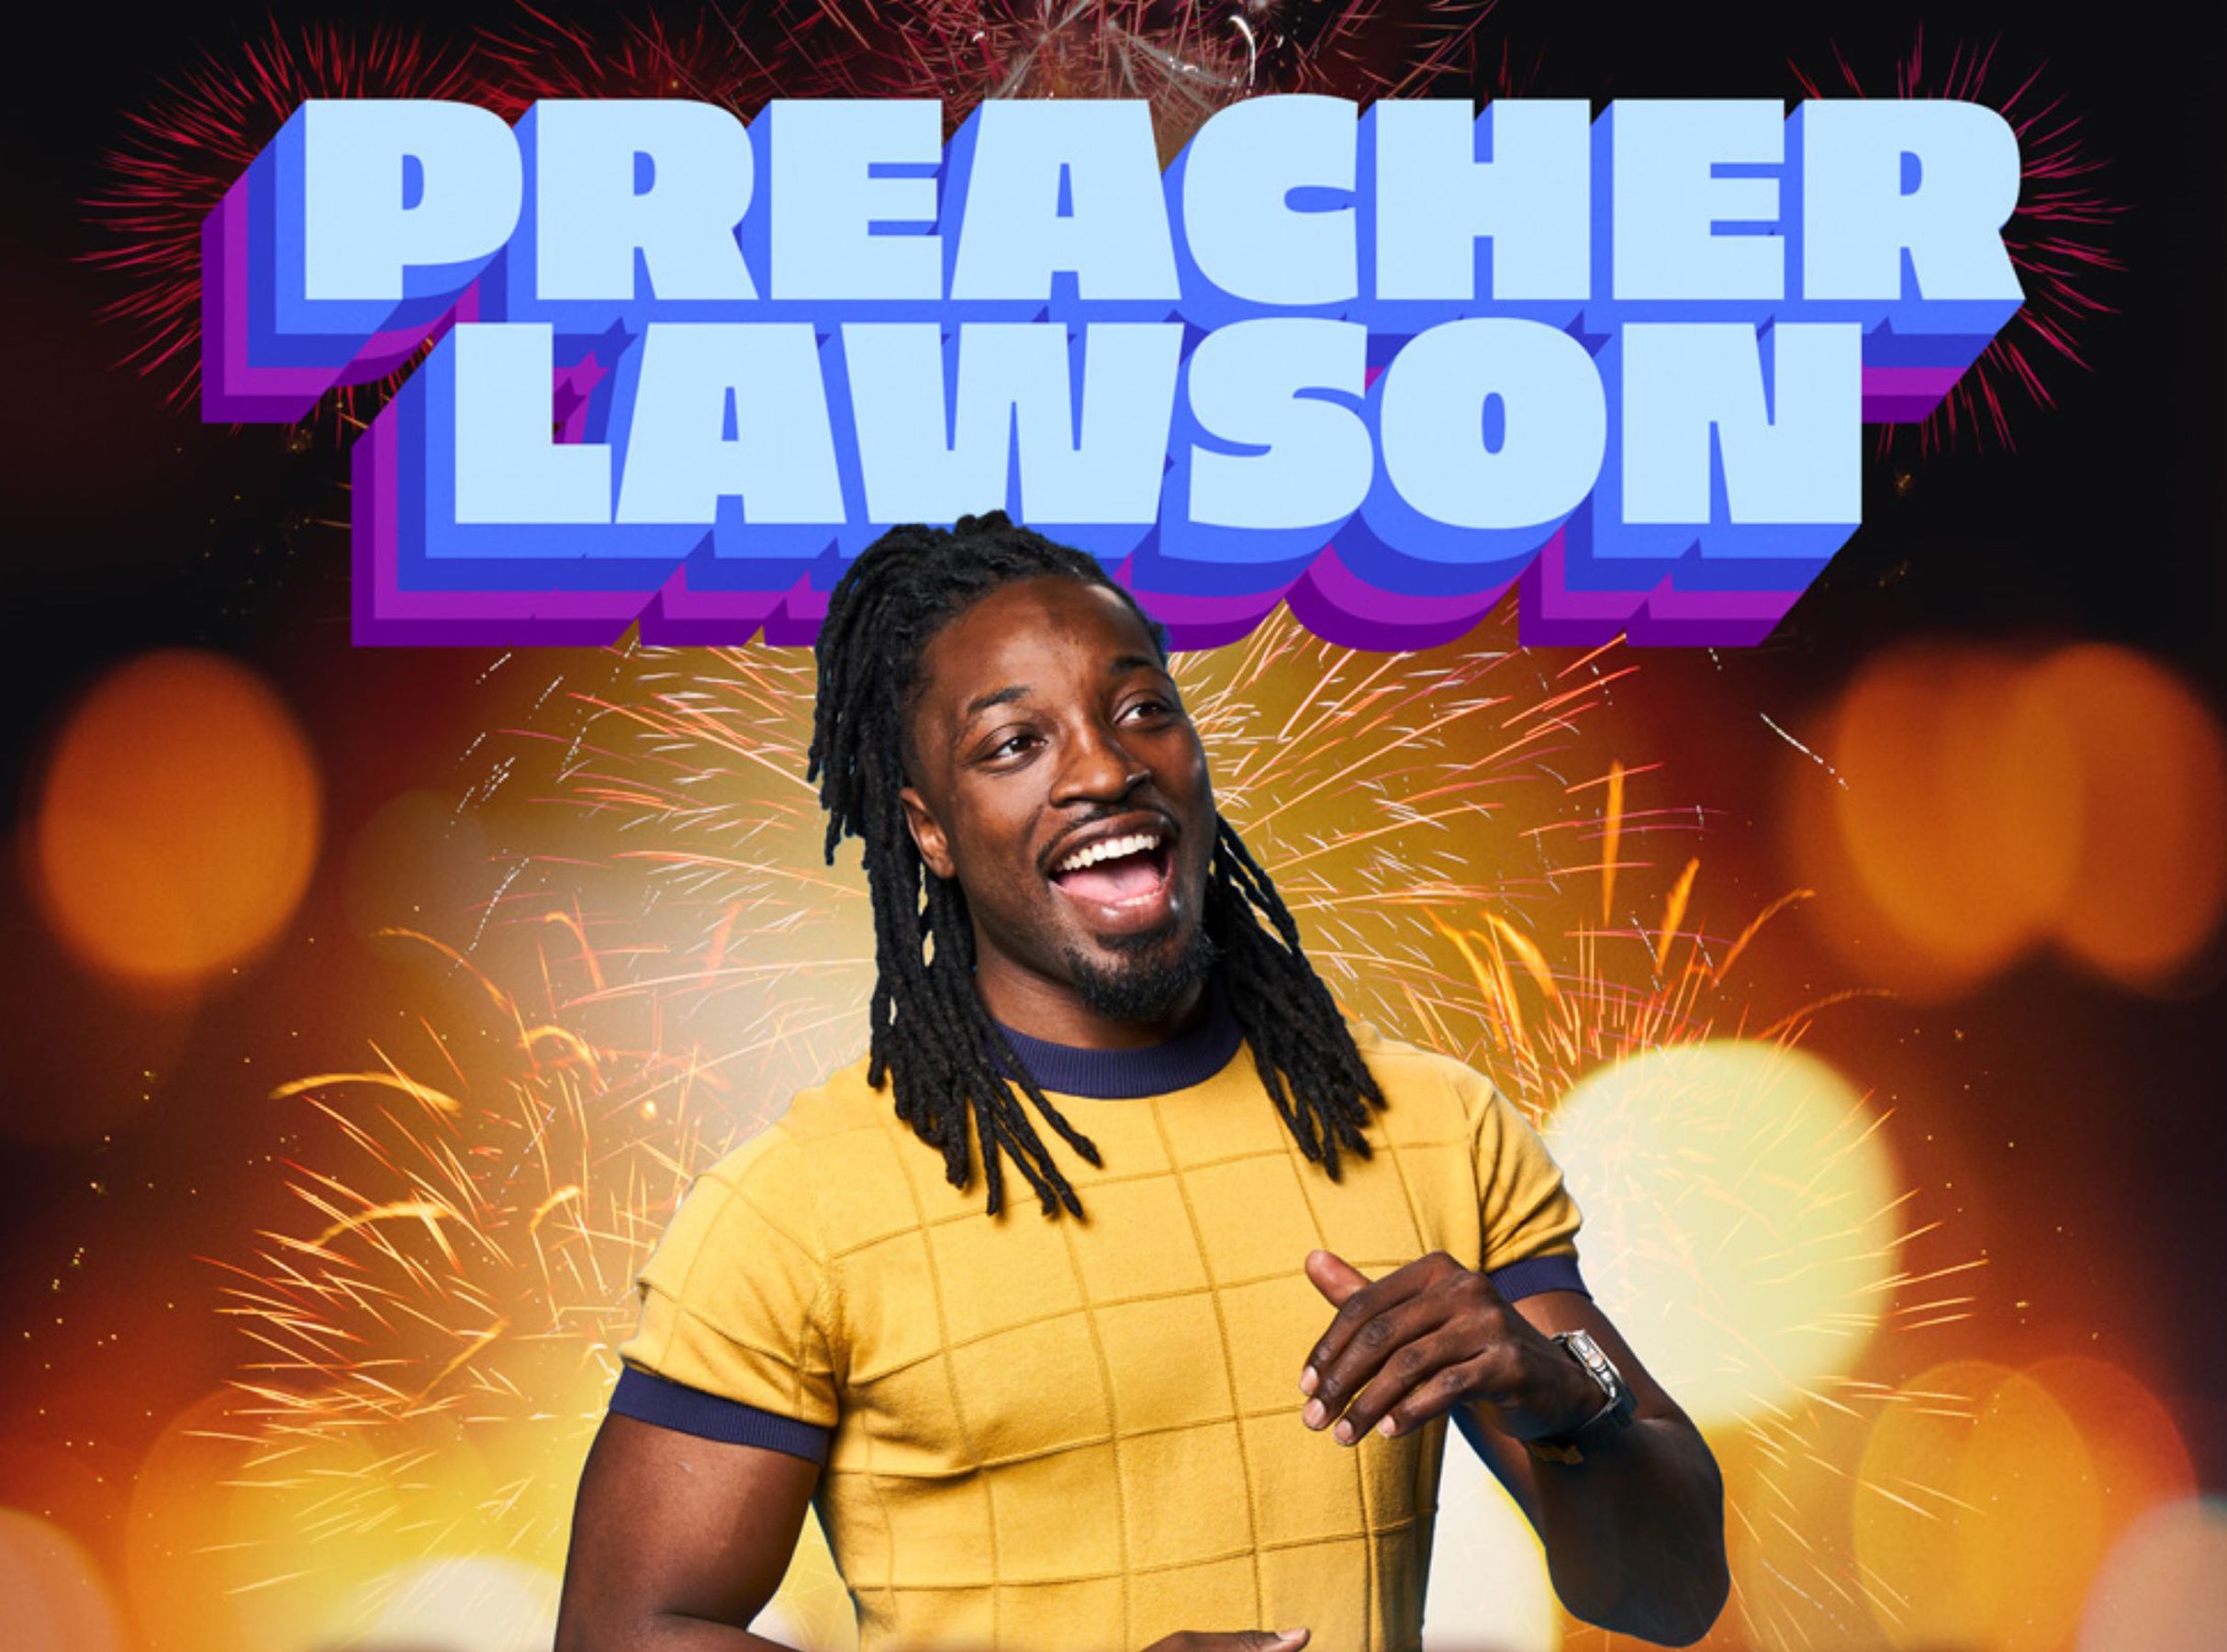 Preacher Lawson at Academy of Music Theatre - MA